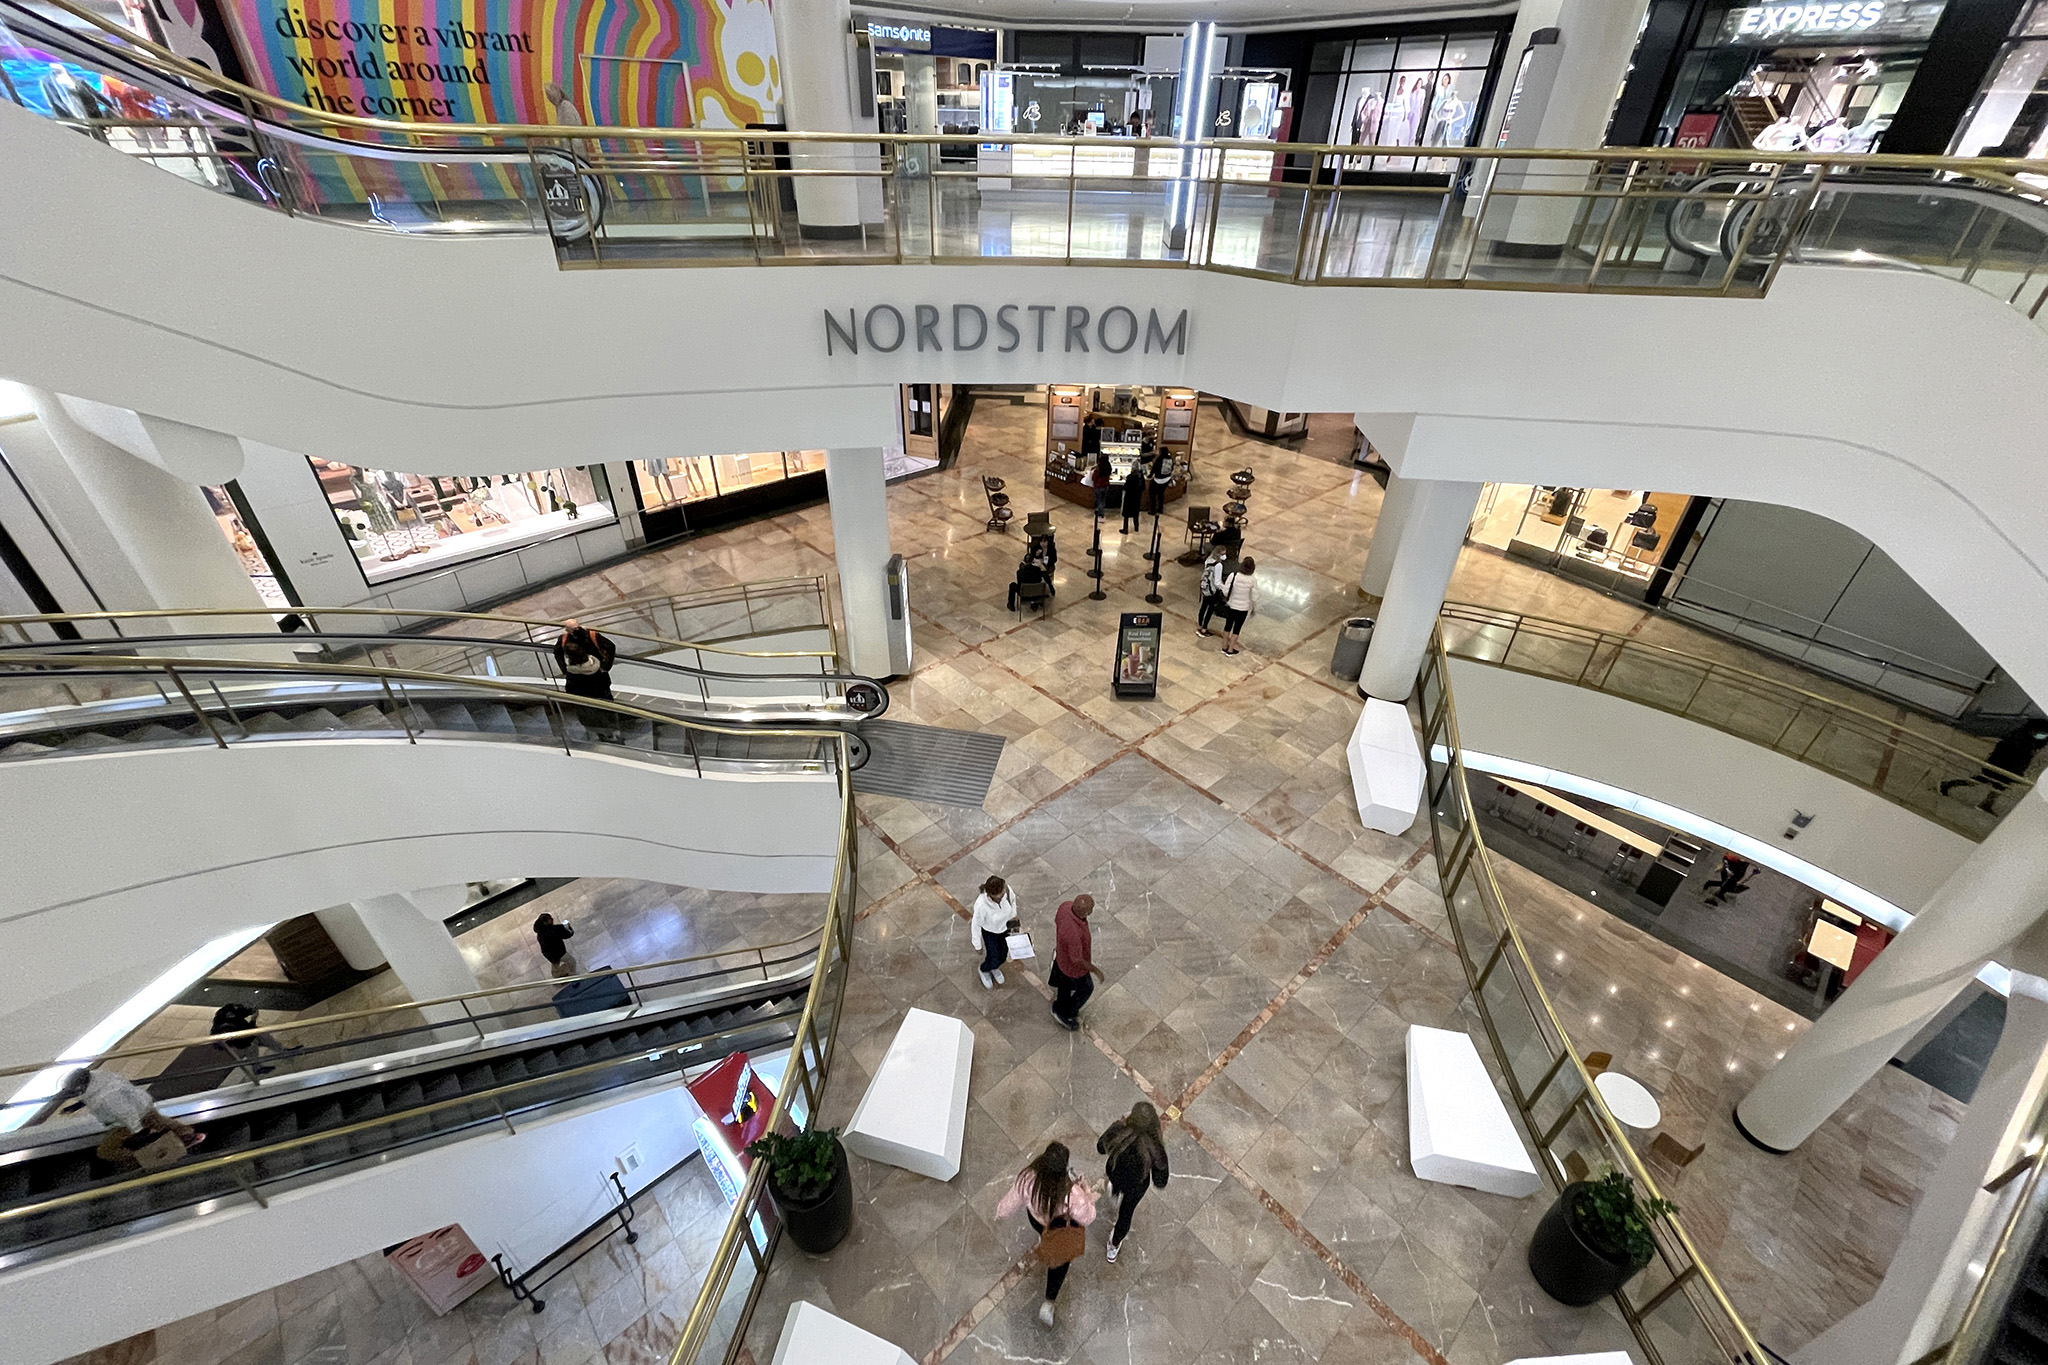 Westfield Shopping Malls in SF, Santa Clara County Reopen – NBC Bay Area